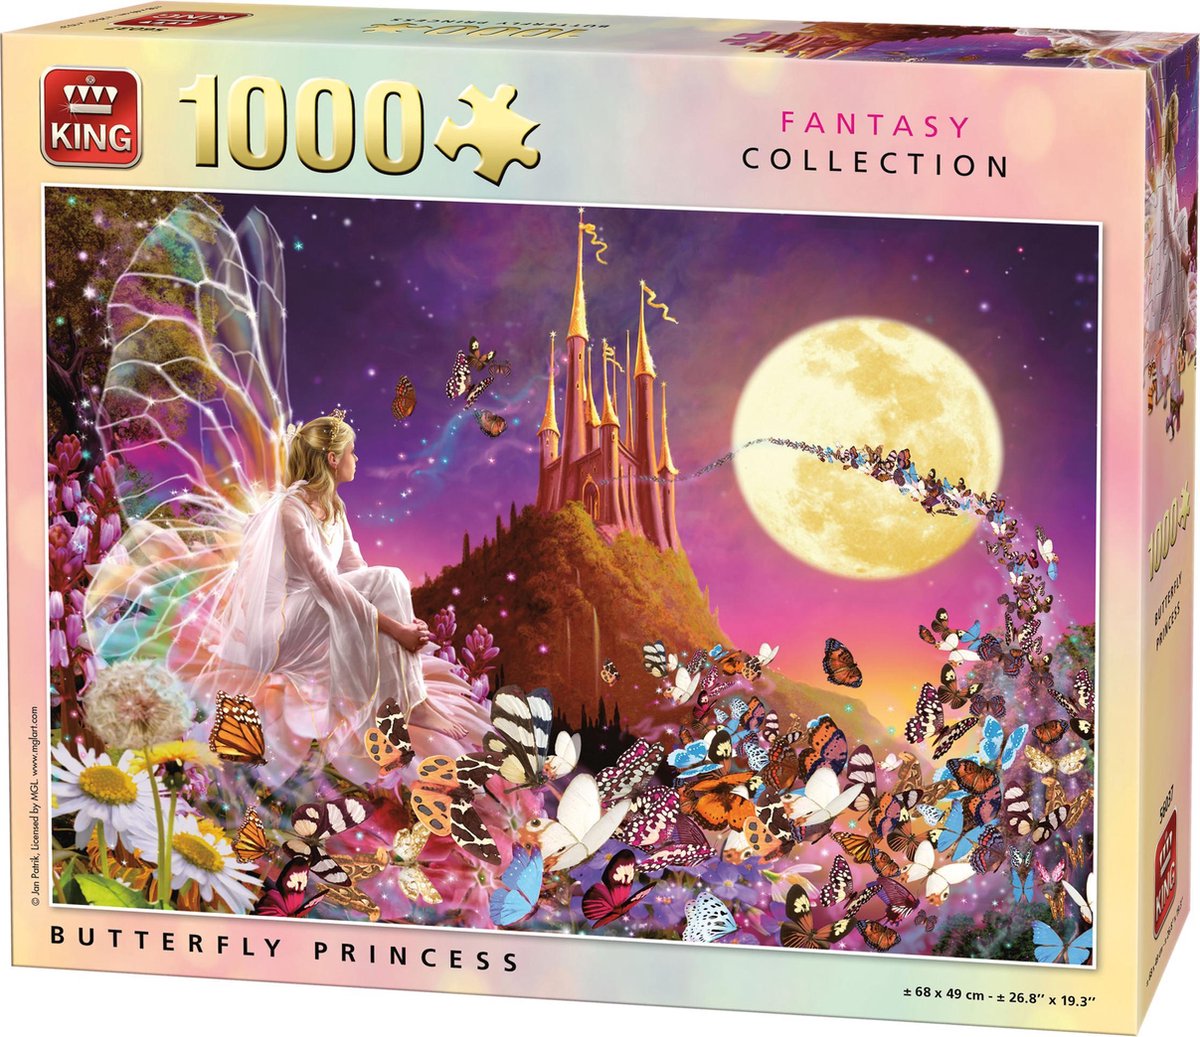 King Puzzel 1000 Stukjes (68 x 49 cm) - Butterfly Princess - Legpuzzel Fantasy